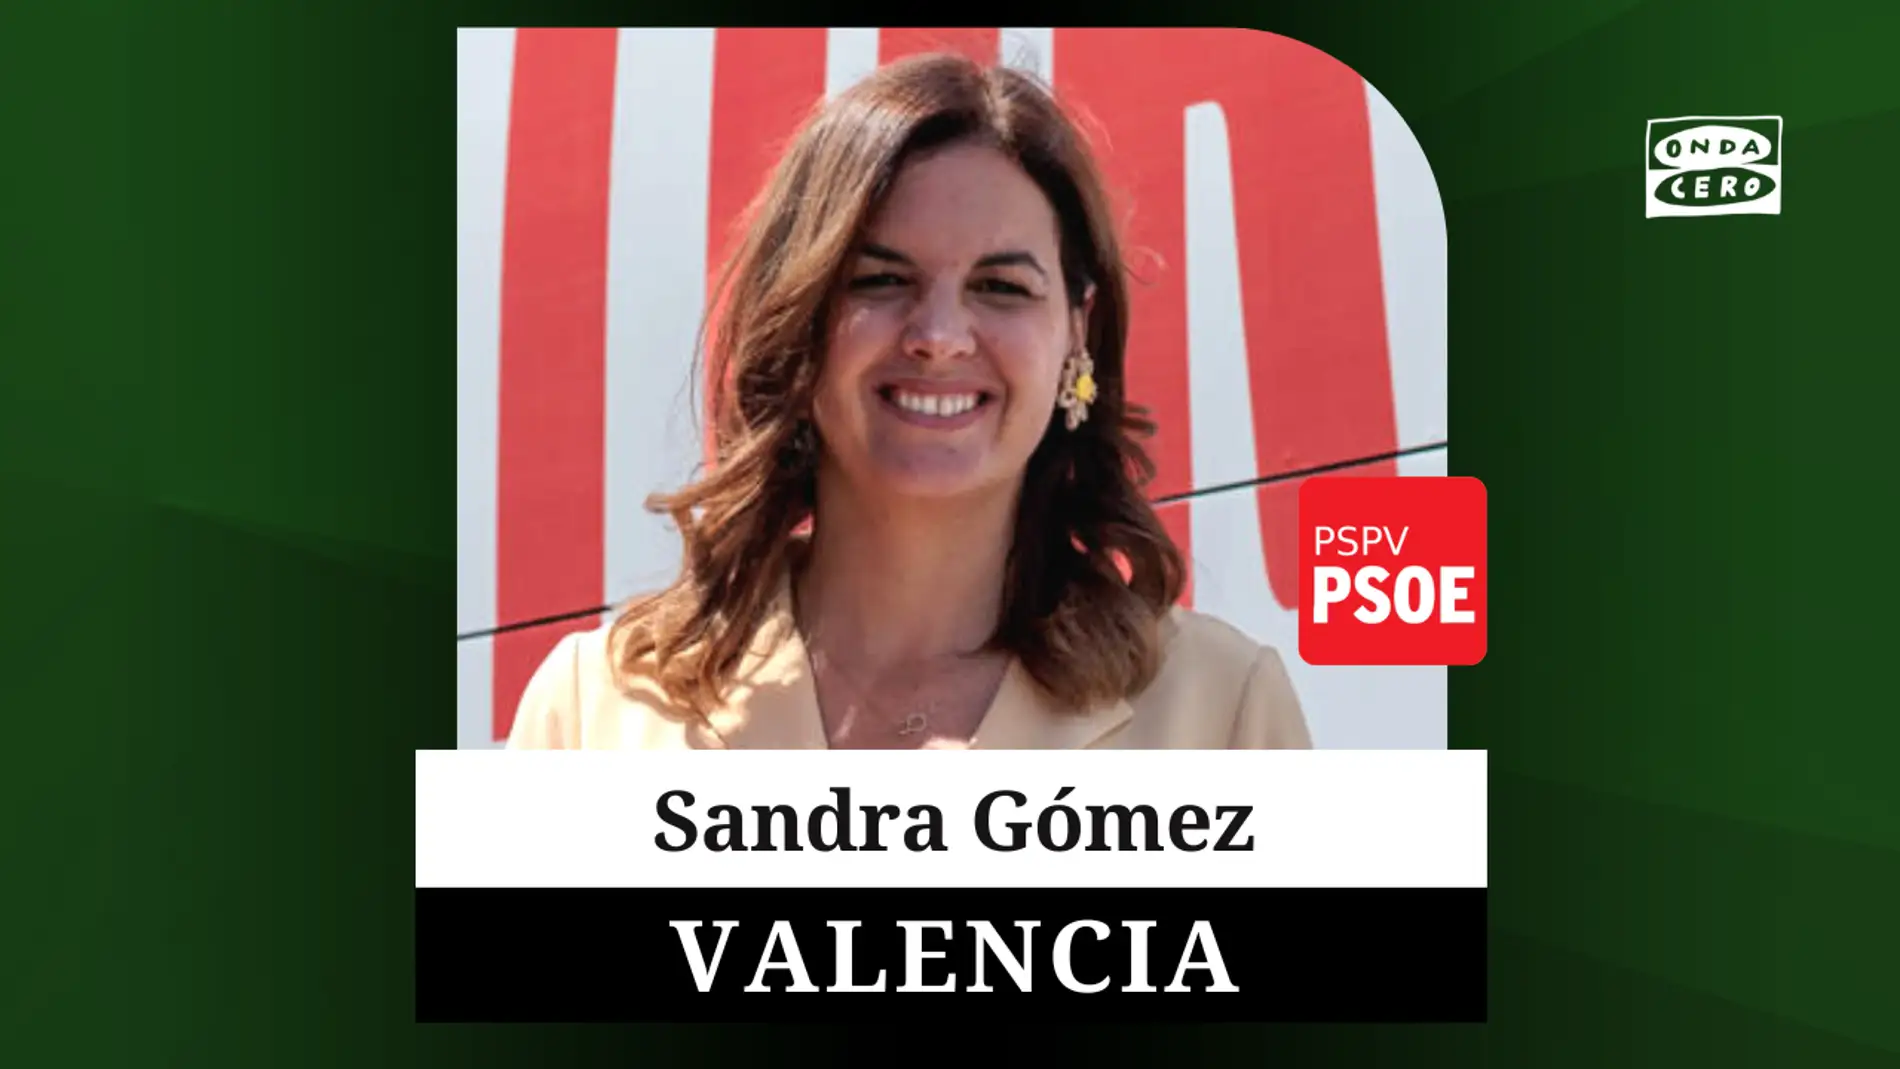 Quién es Sandra Gómez, candidata del PSPV-PSOE a la alcaldía de València